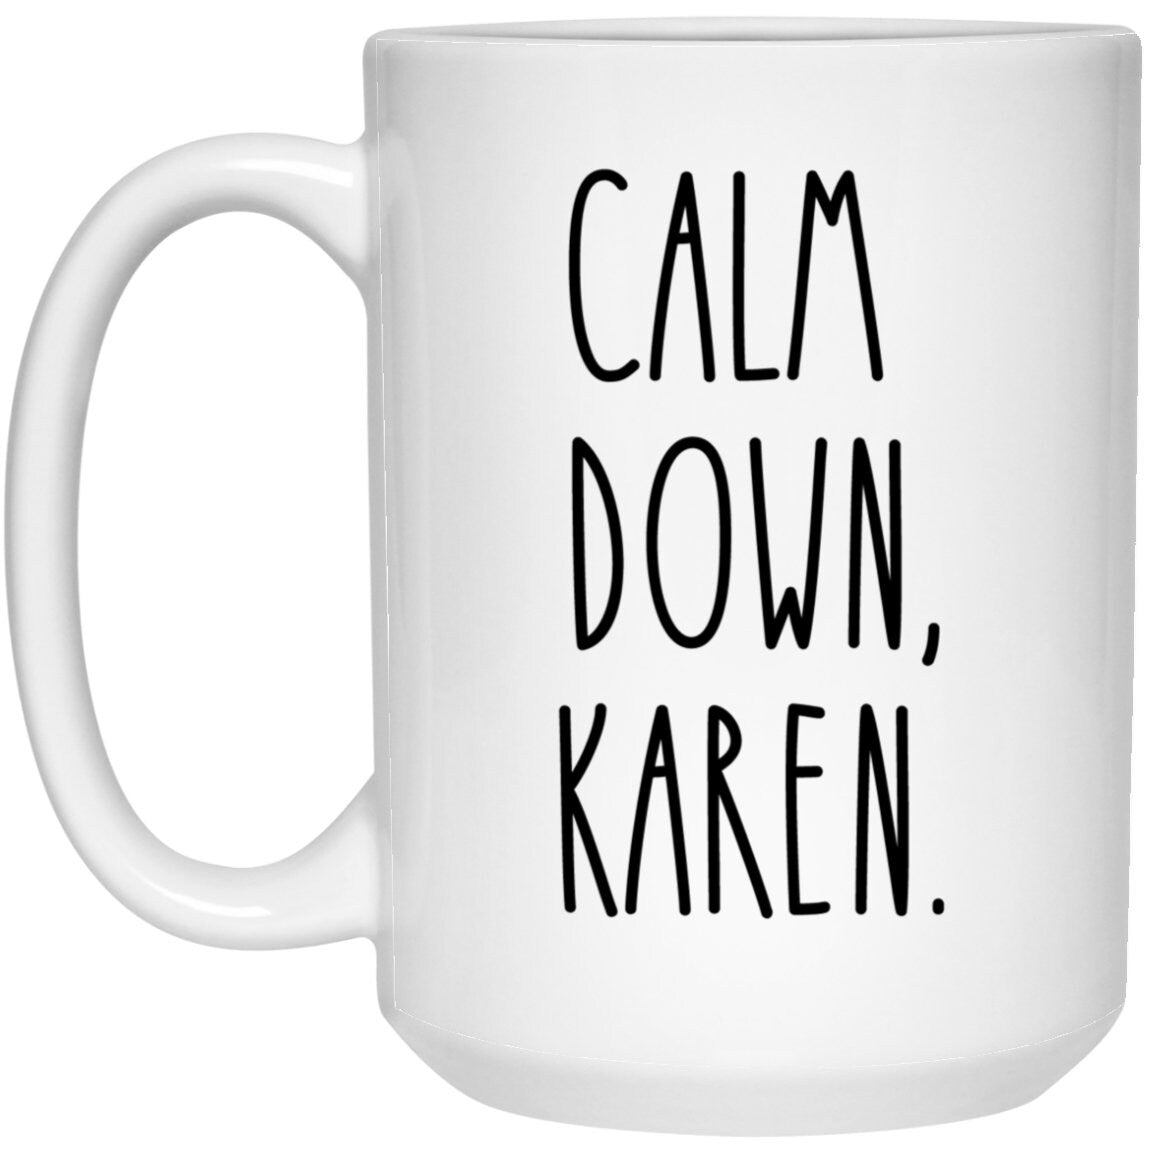 Calm Down Karen Mug